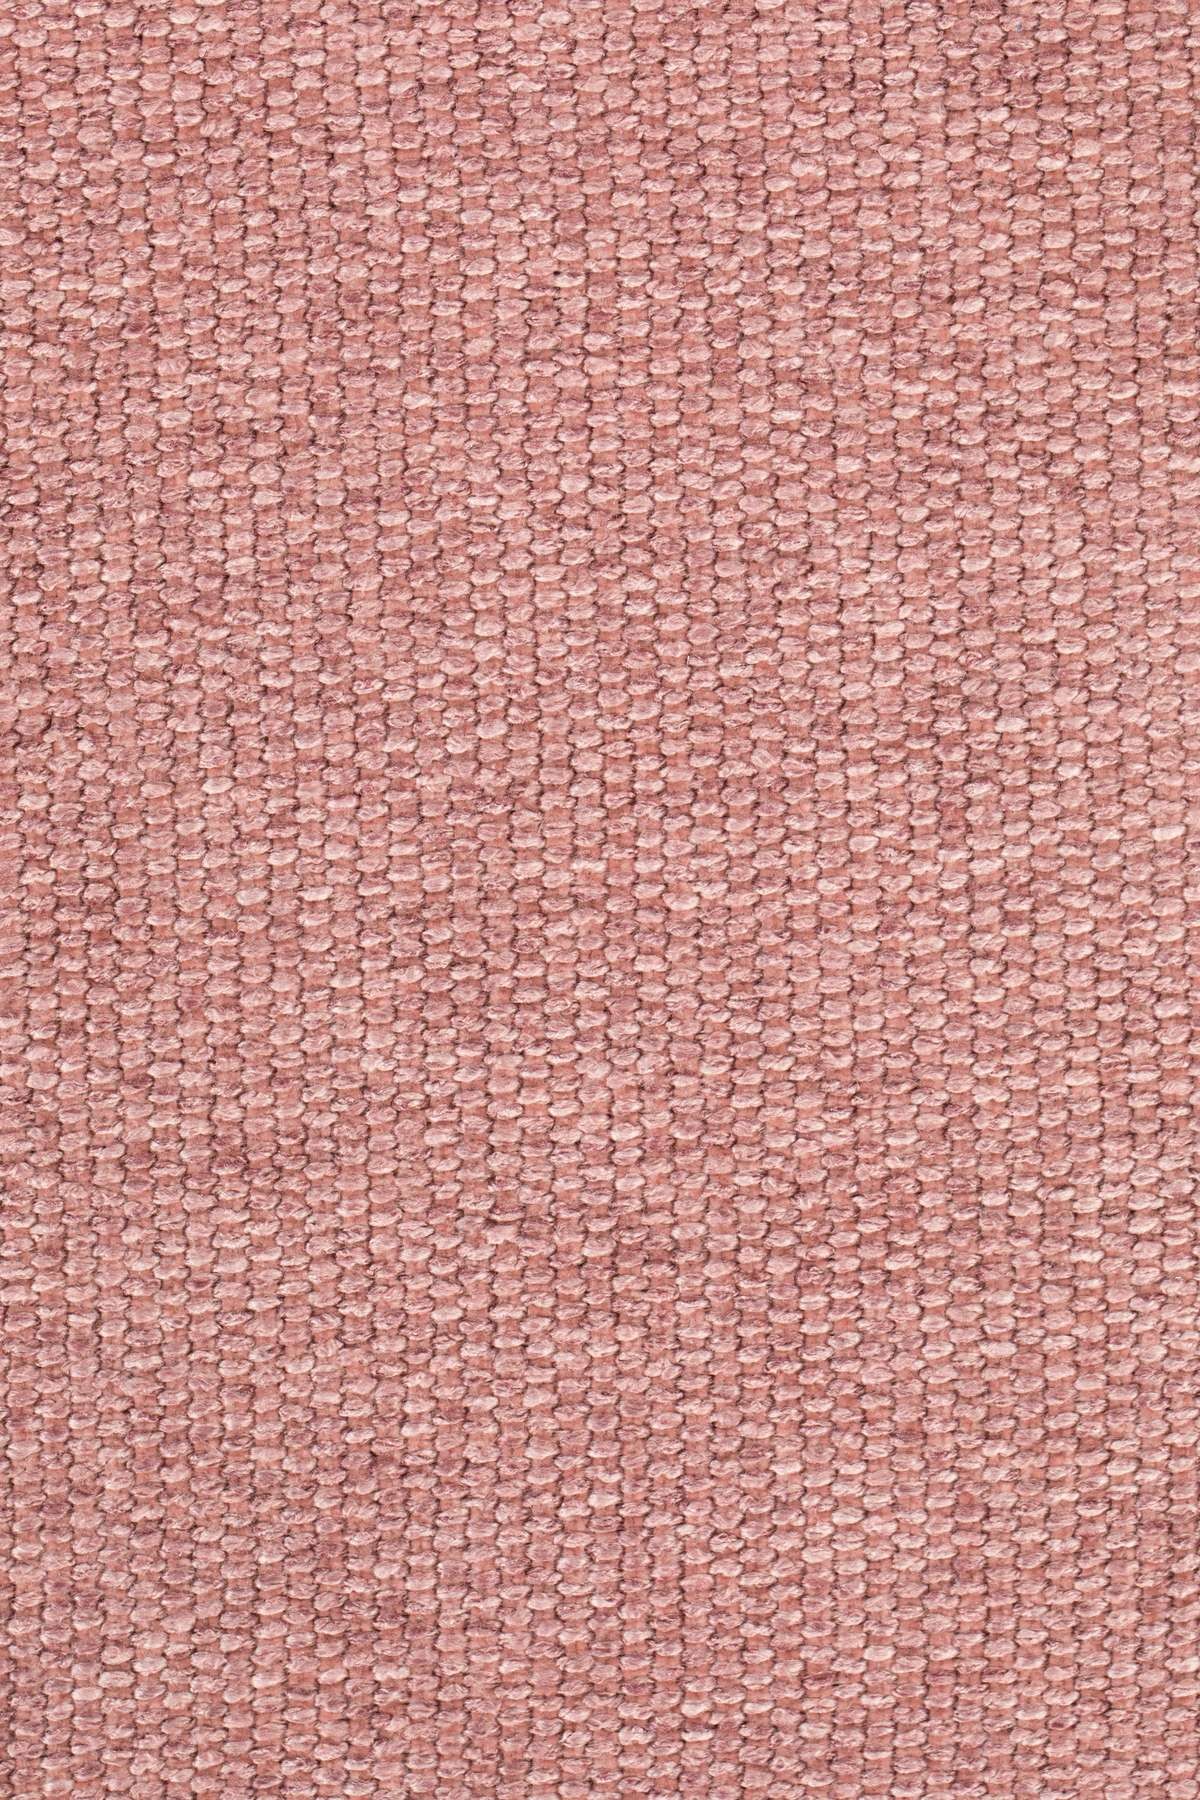 Fotel Albert Kuip Soft, różowy